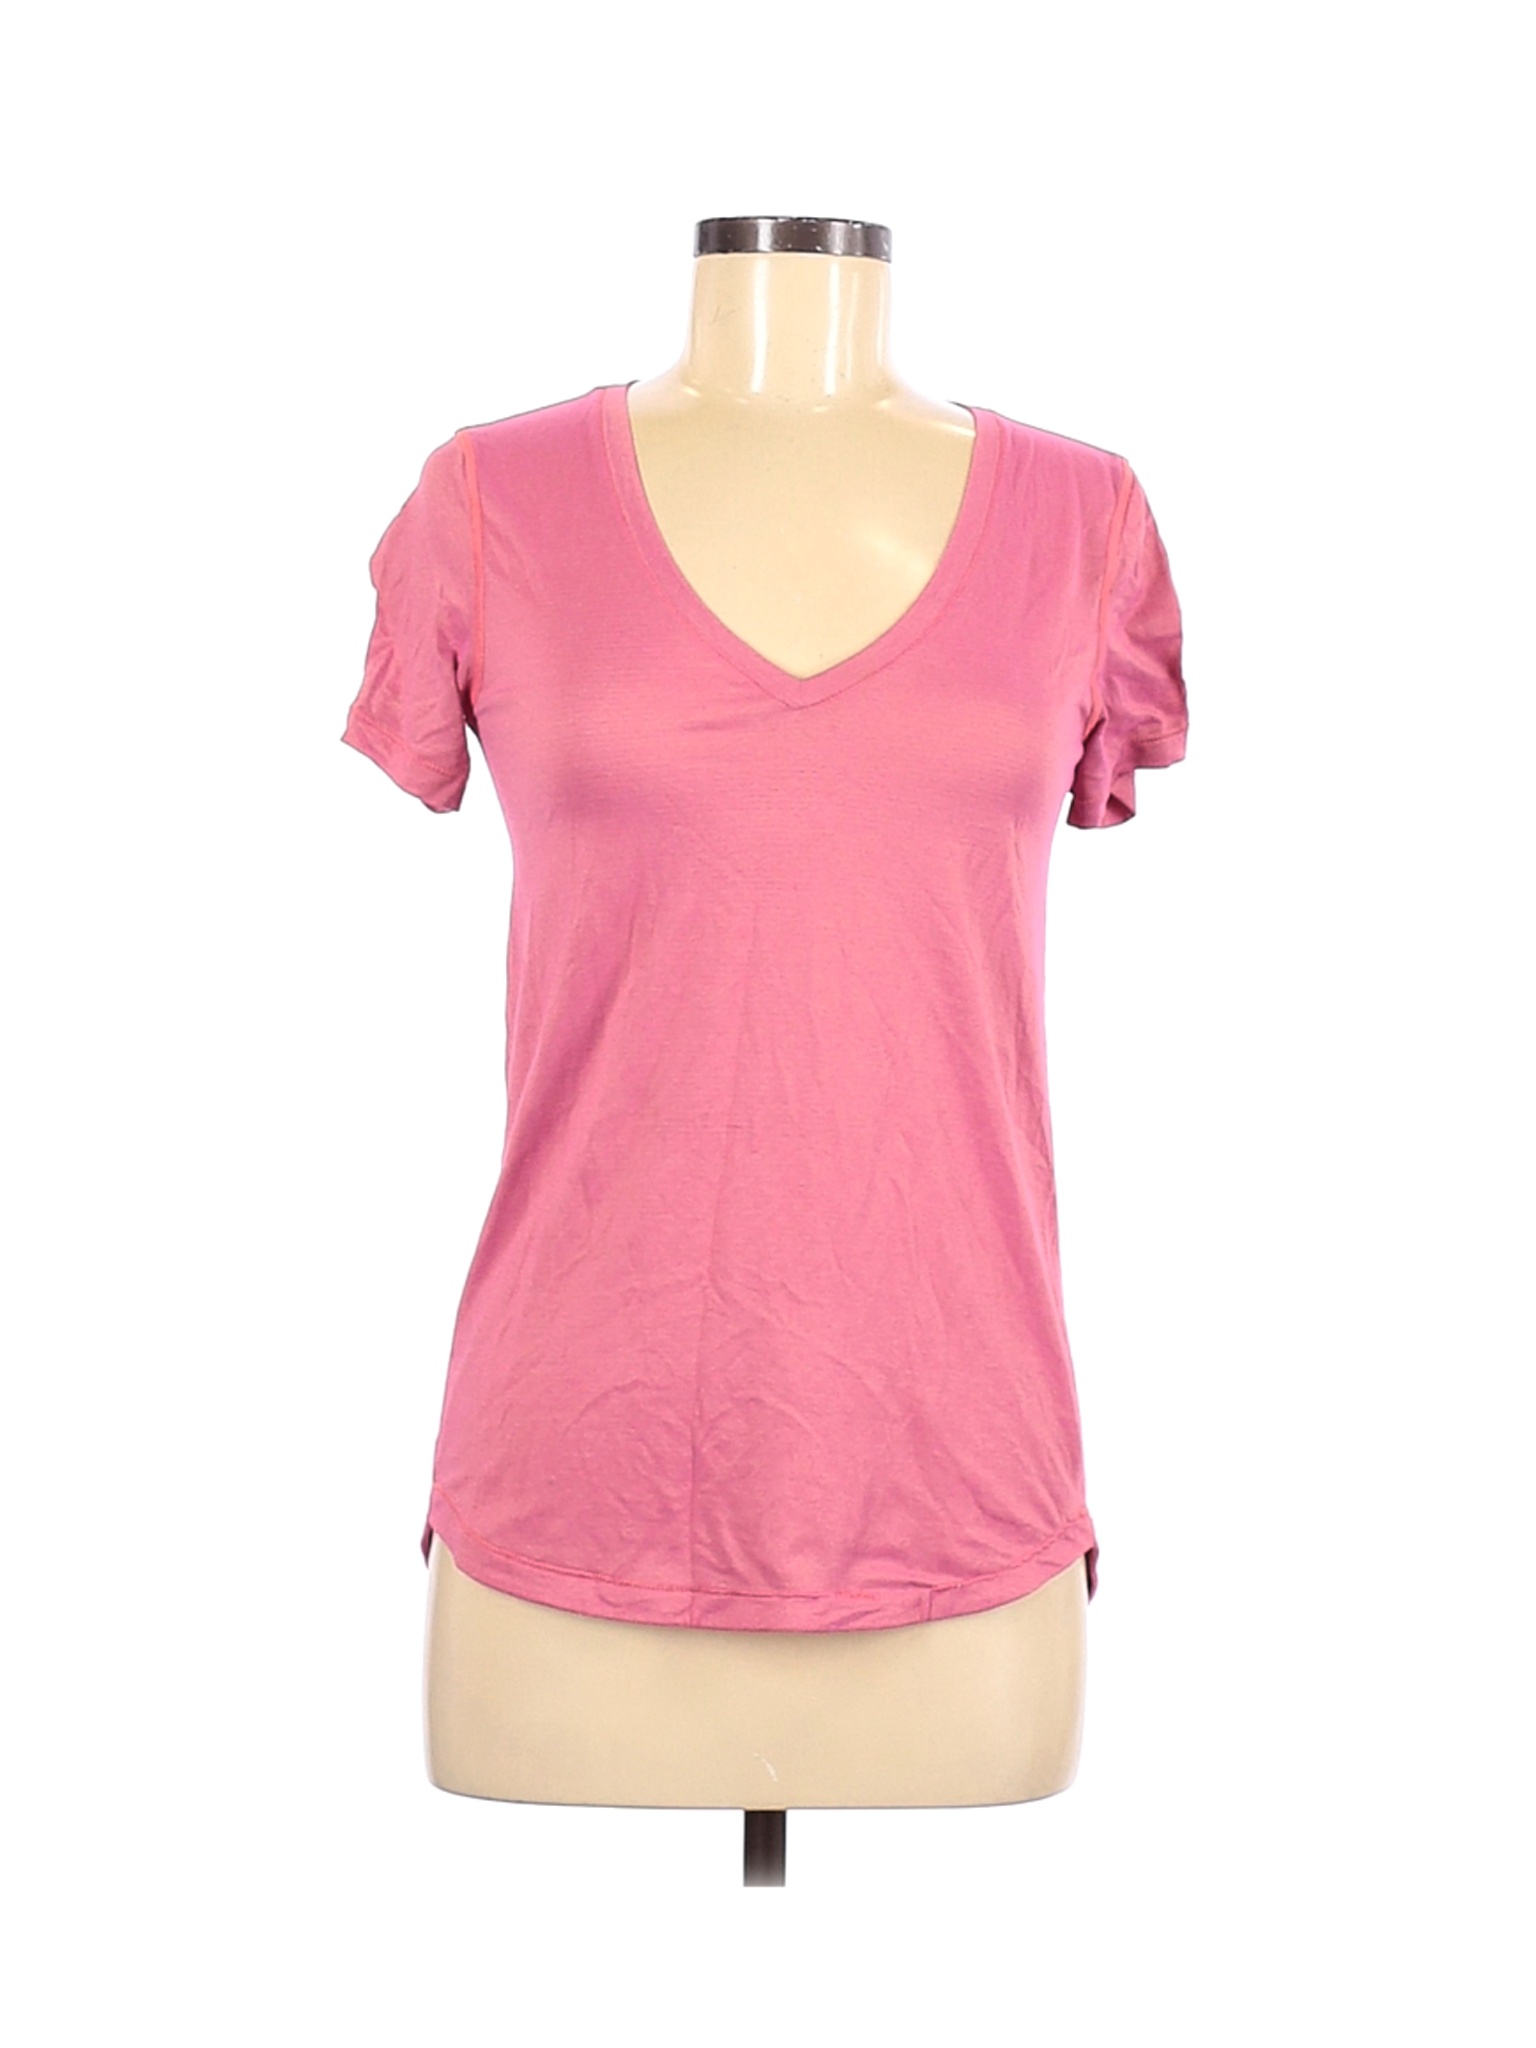 Lululemon Athletica Women Pink Active T-Shirt 6 | eBay